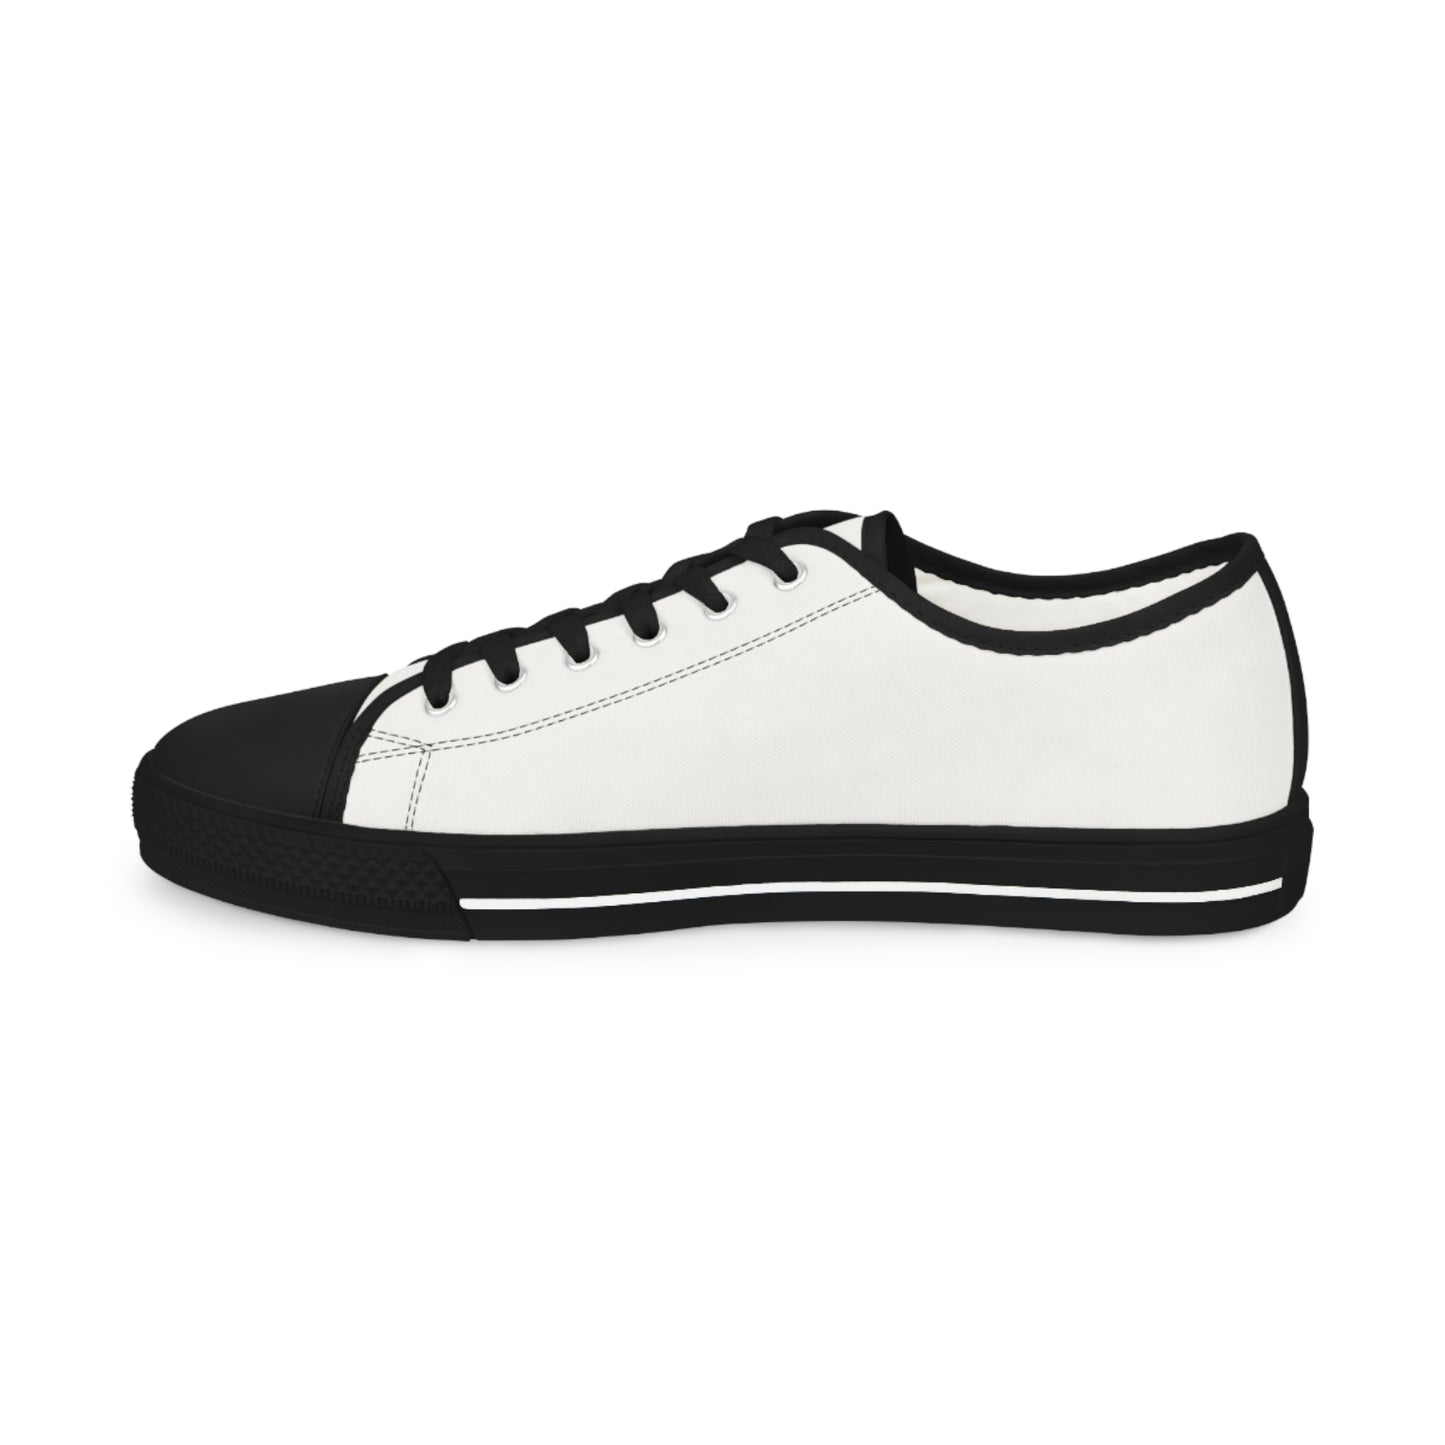 Men's Low Top Sneakers - Template US 14 Black sole